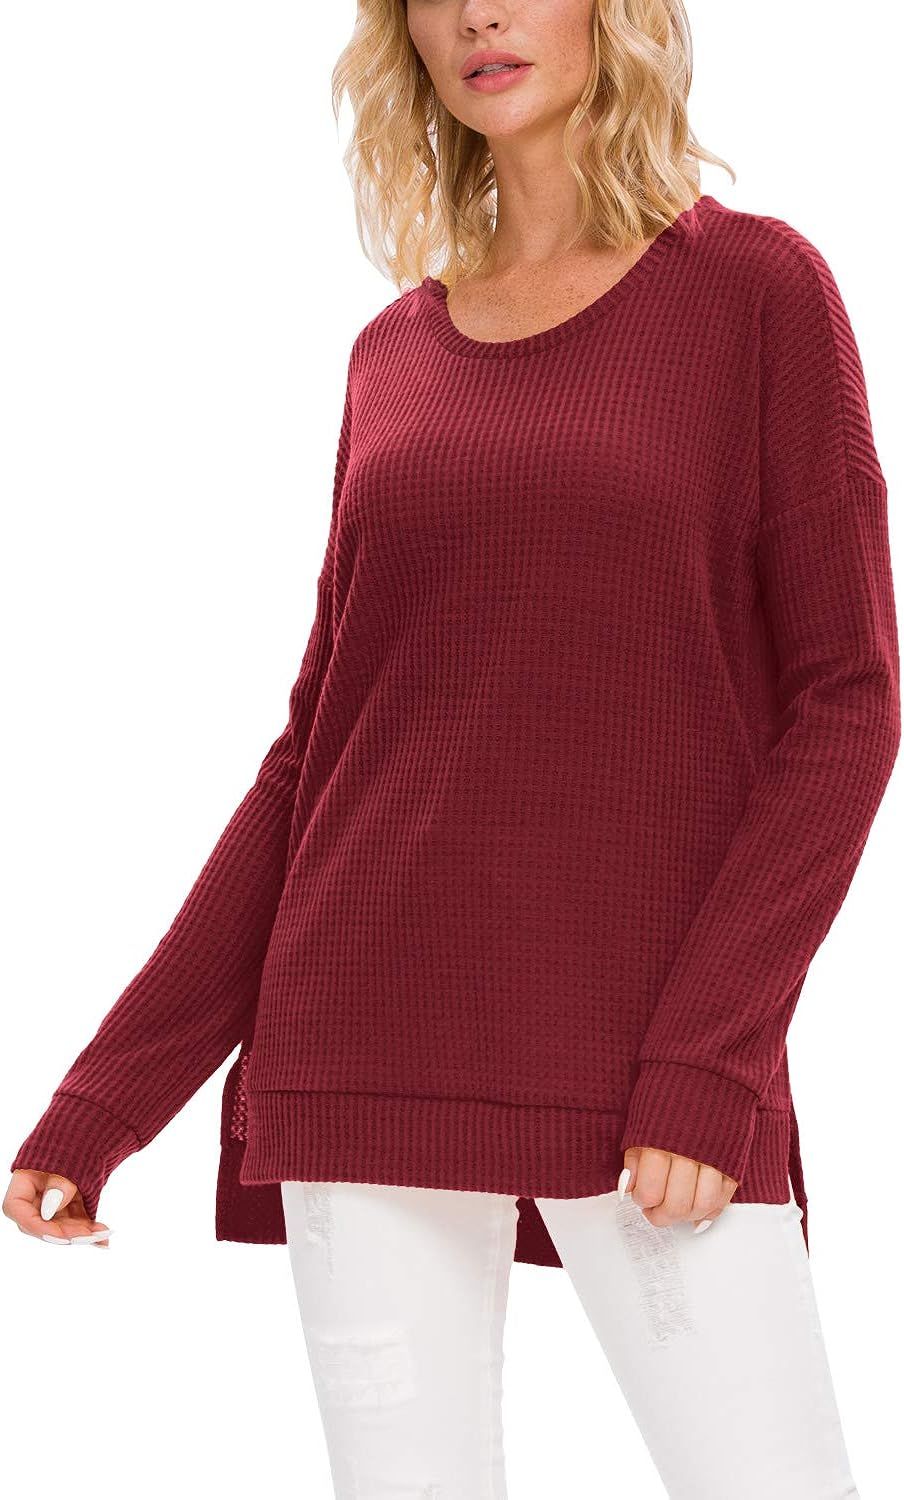 levaca Women's Casual Fall Long Sleeve Shirts Sweaters Tunic Tops for Leggings | Amazon (US)